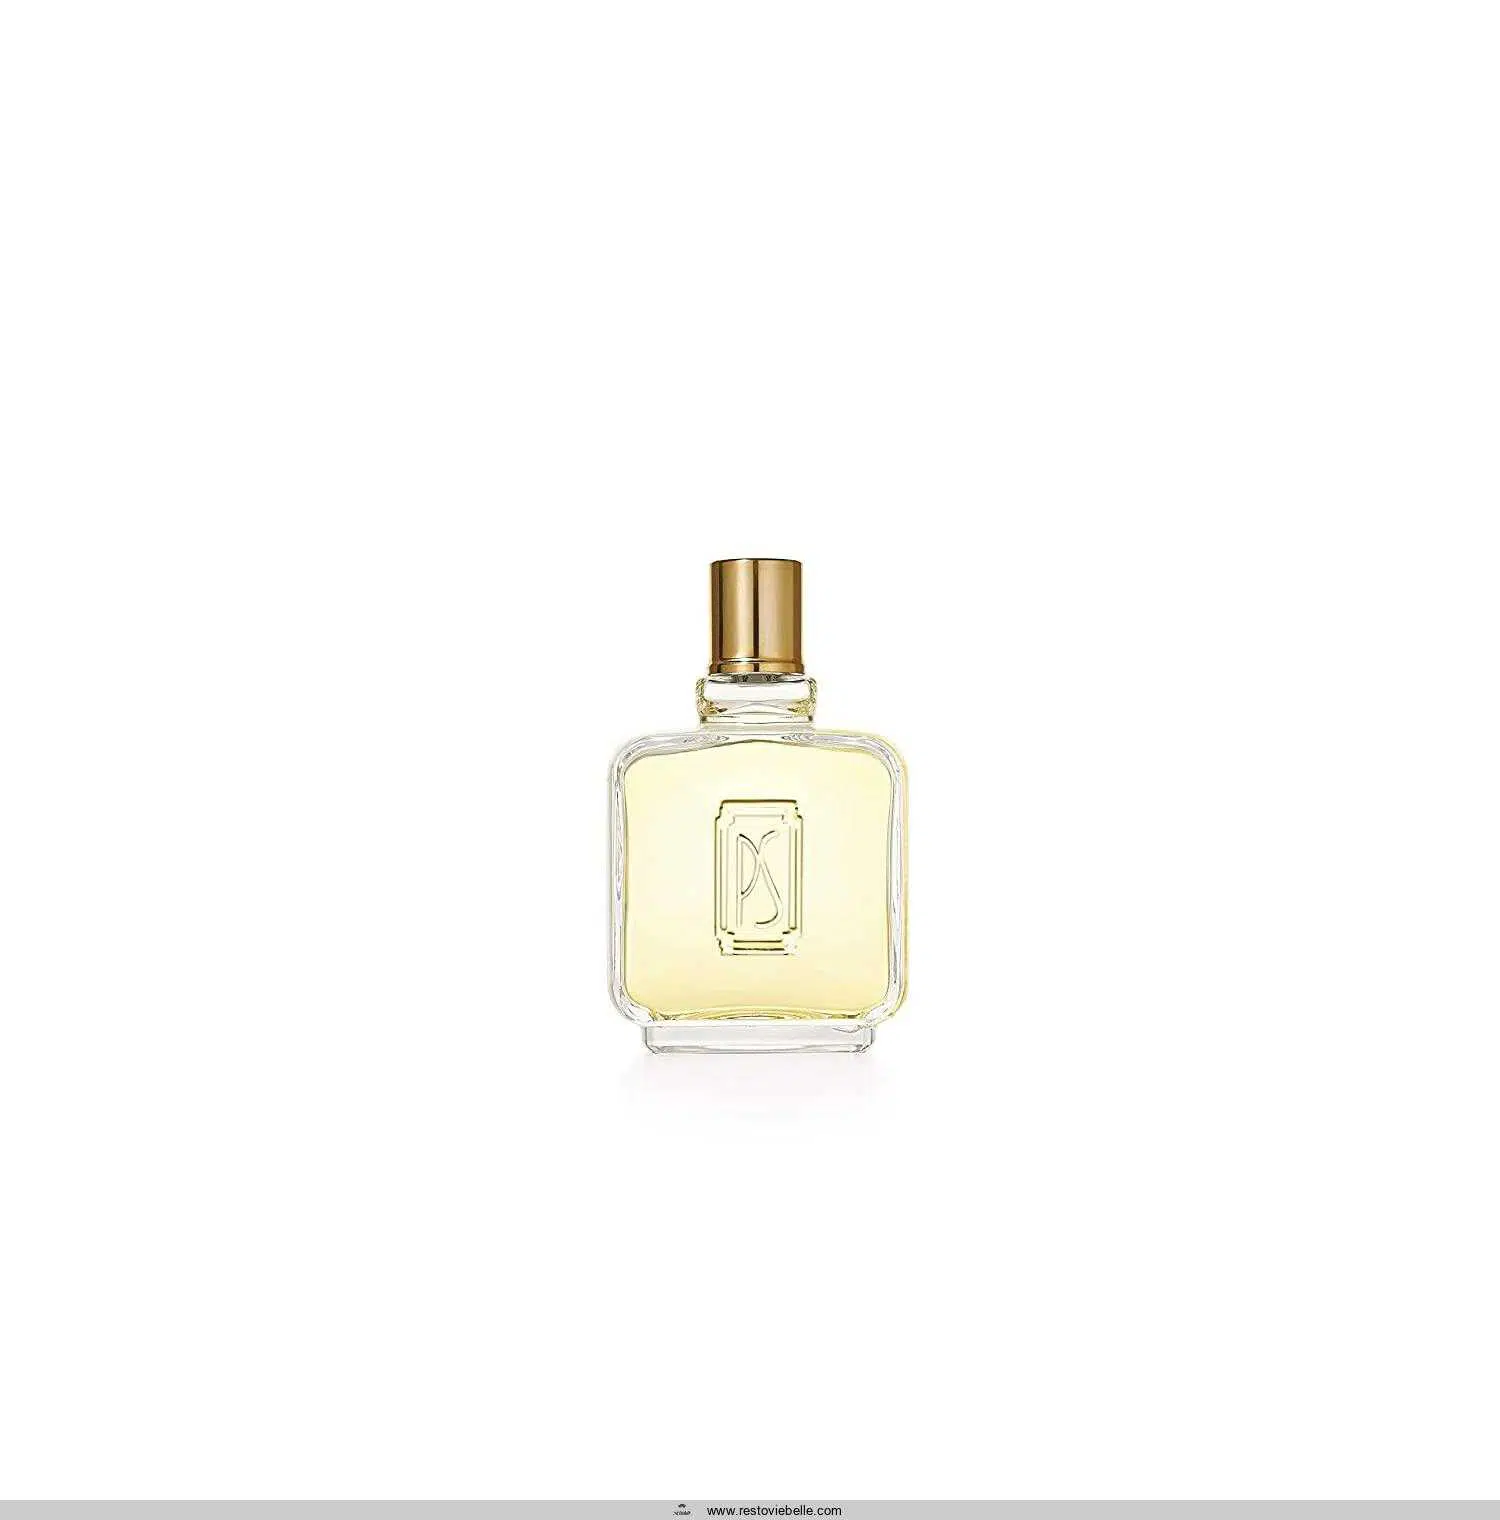 Men's Cologne Fragrance by Paul